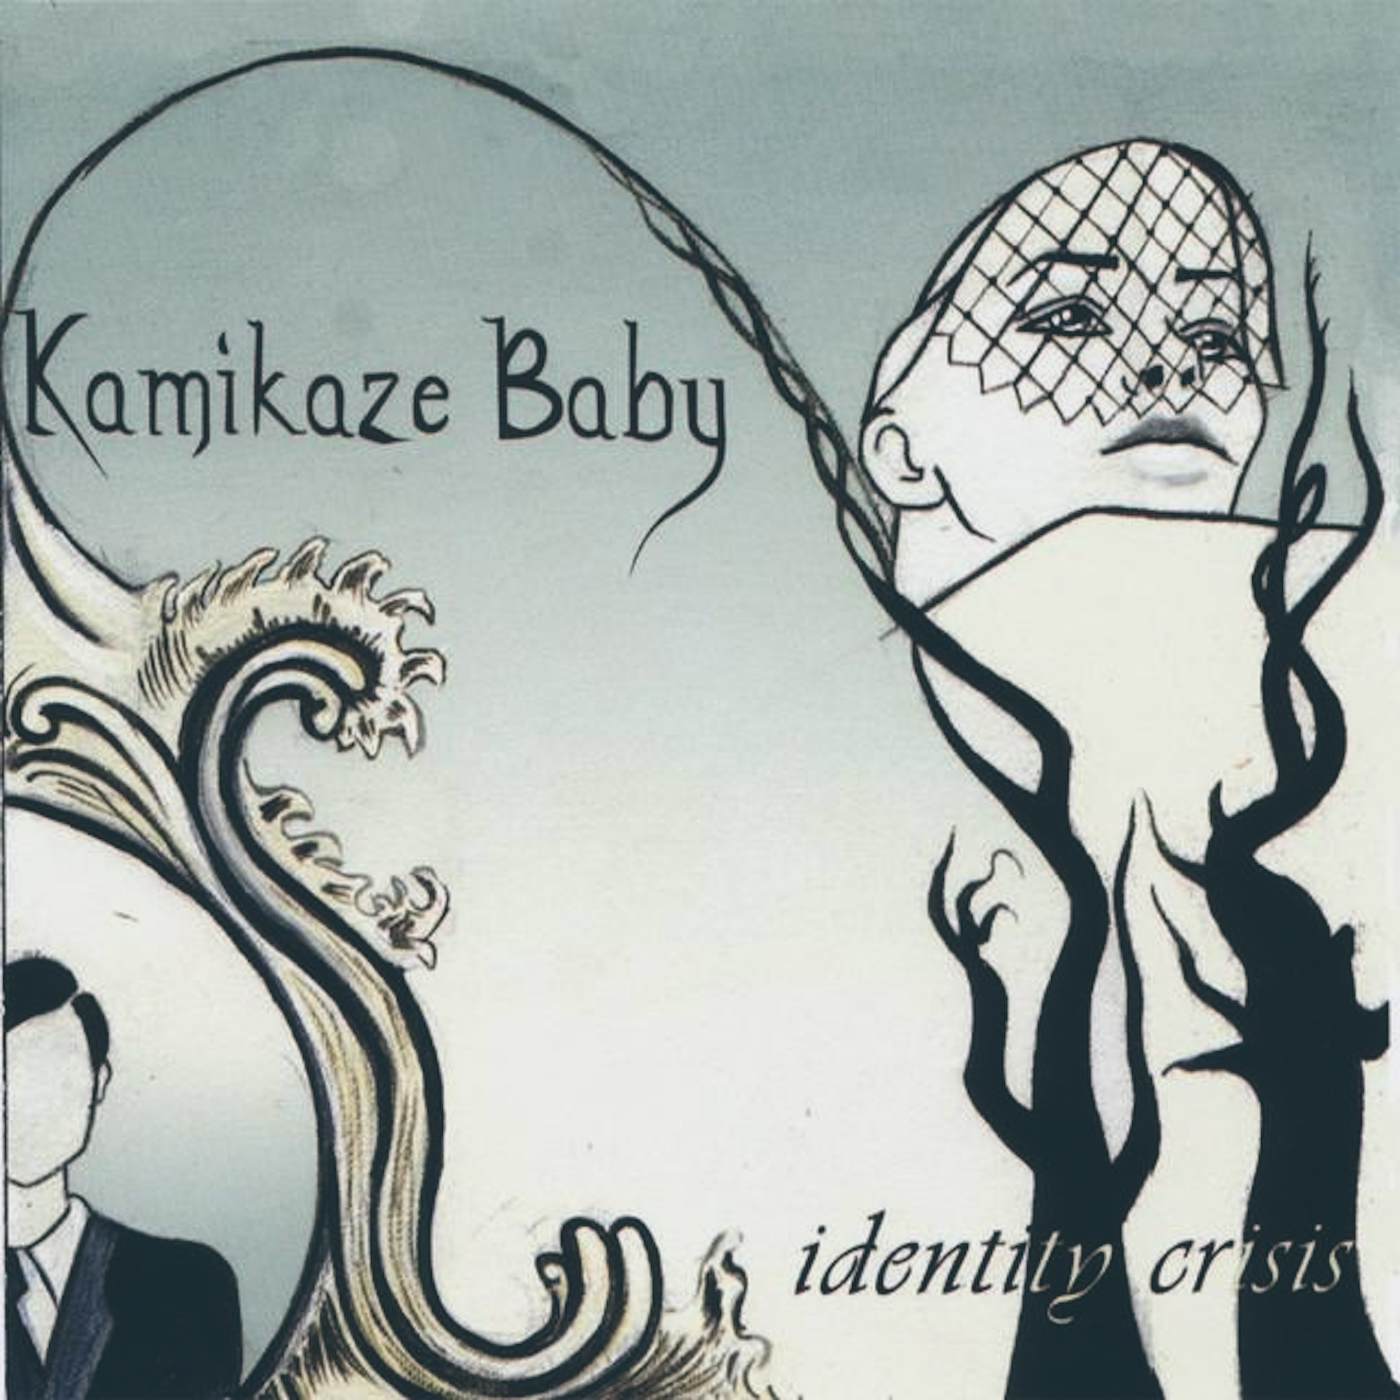 Kamikaze Baby